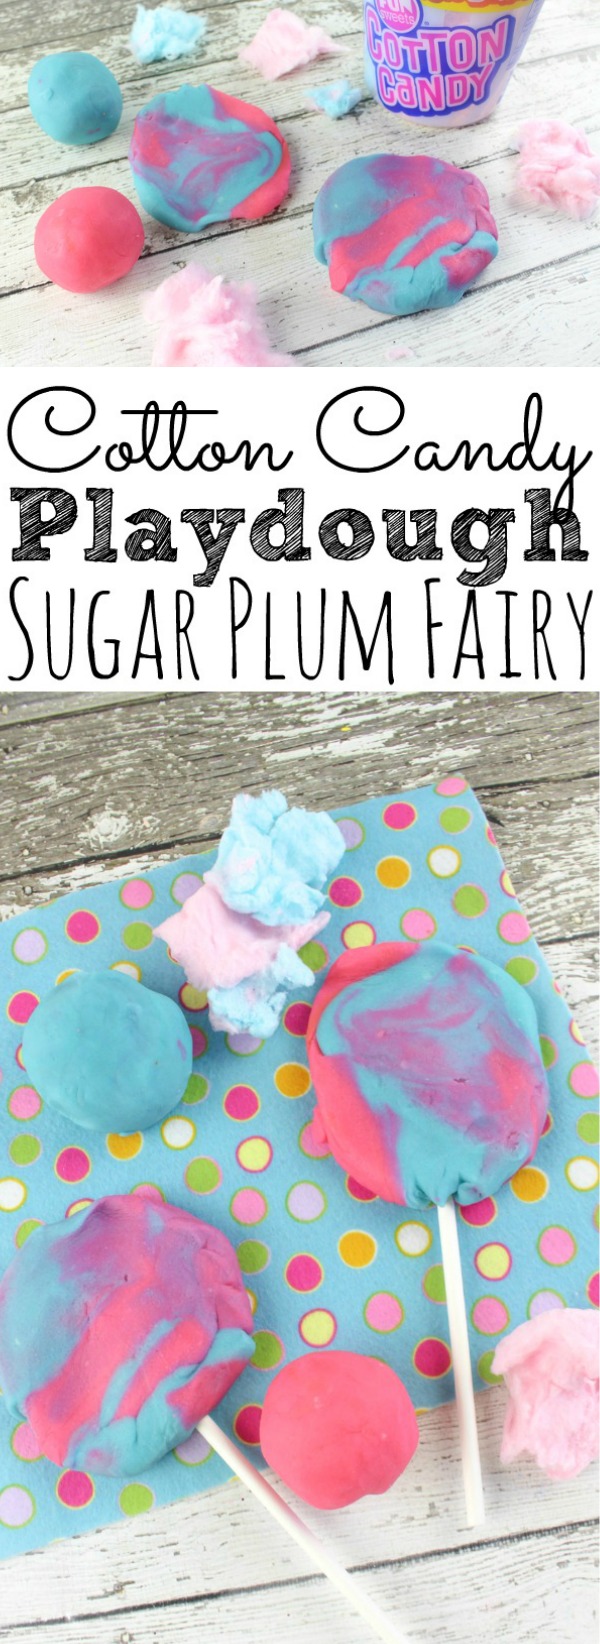 Sugar Plum Fairy Cotton Candy Playdough Recipe 